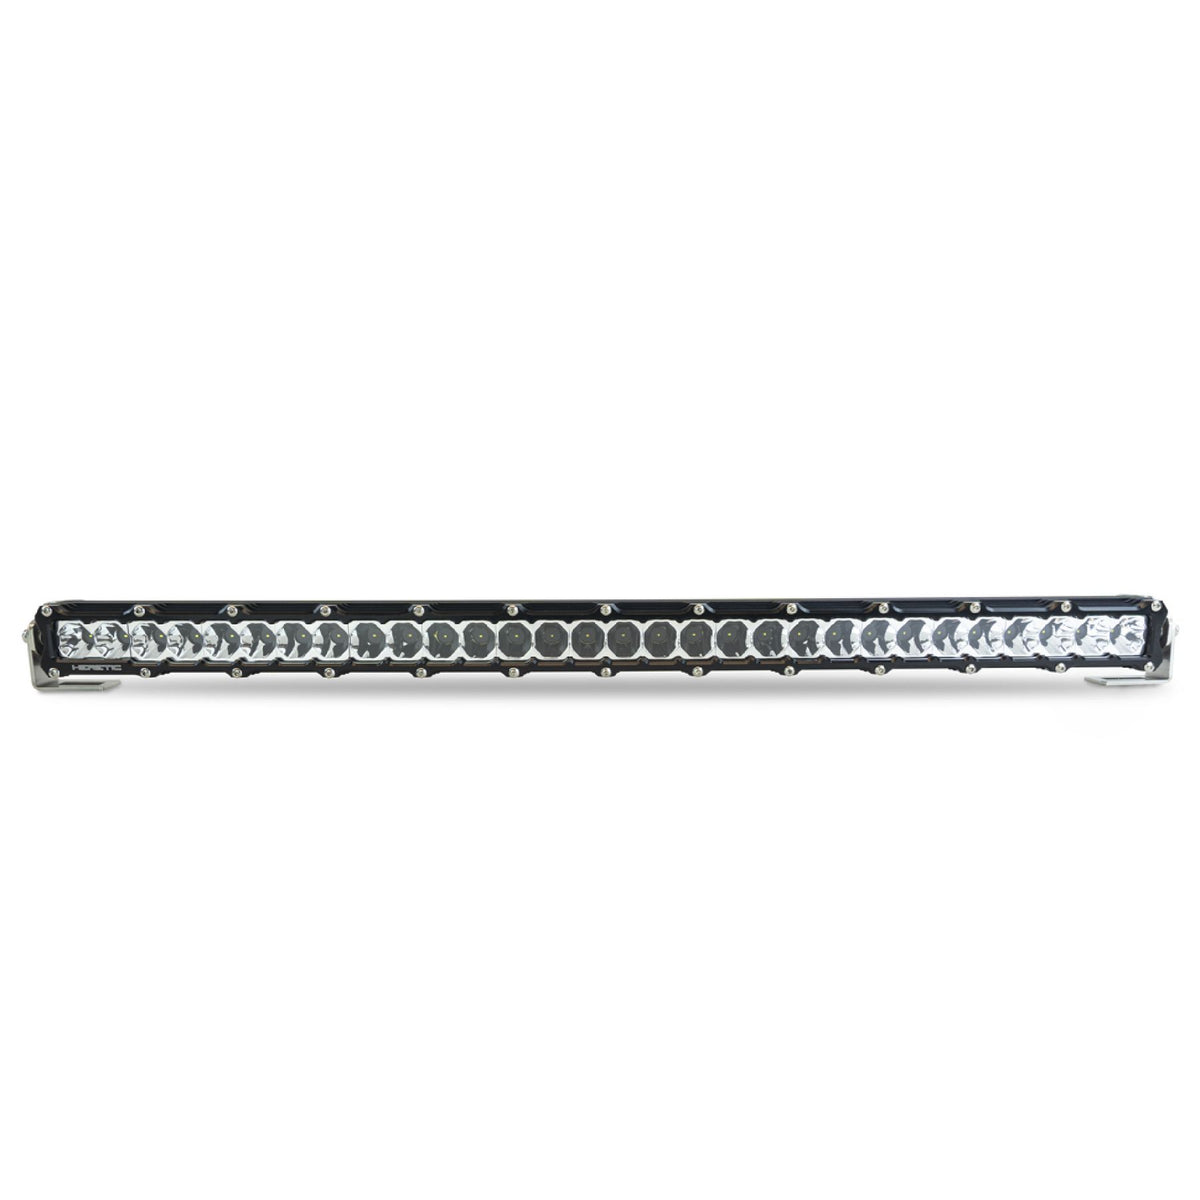 30&quot; LED LIGHT BAR-Light Bar-Heretic Studio-Combo-Wiring Harness: 30&quot; and Below for Single Light Bar (up to 180W) + $49.99-Black Market UTV